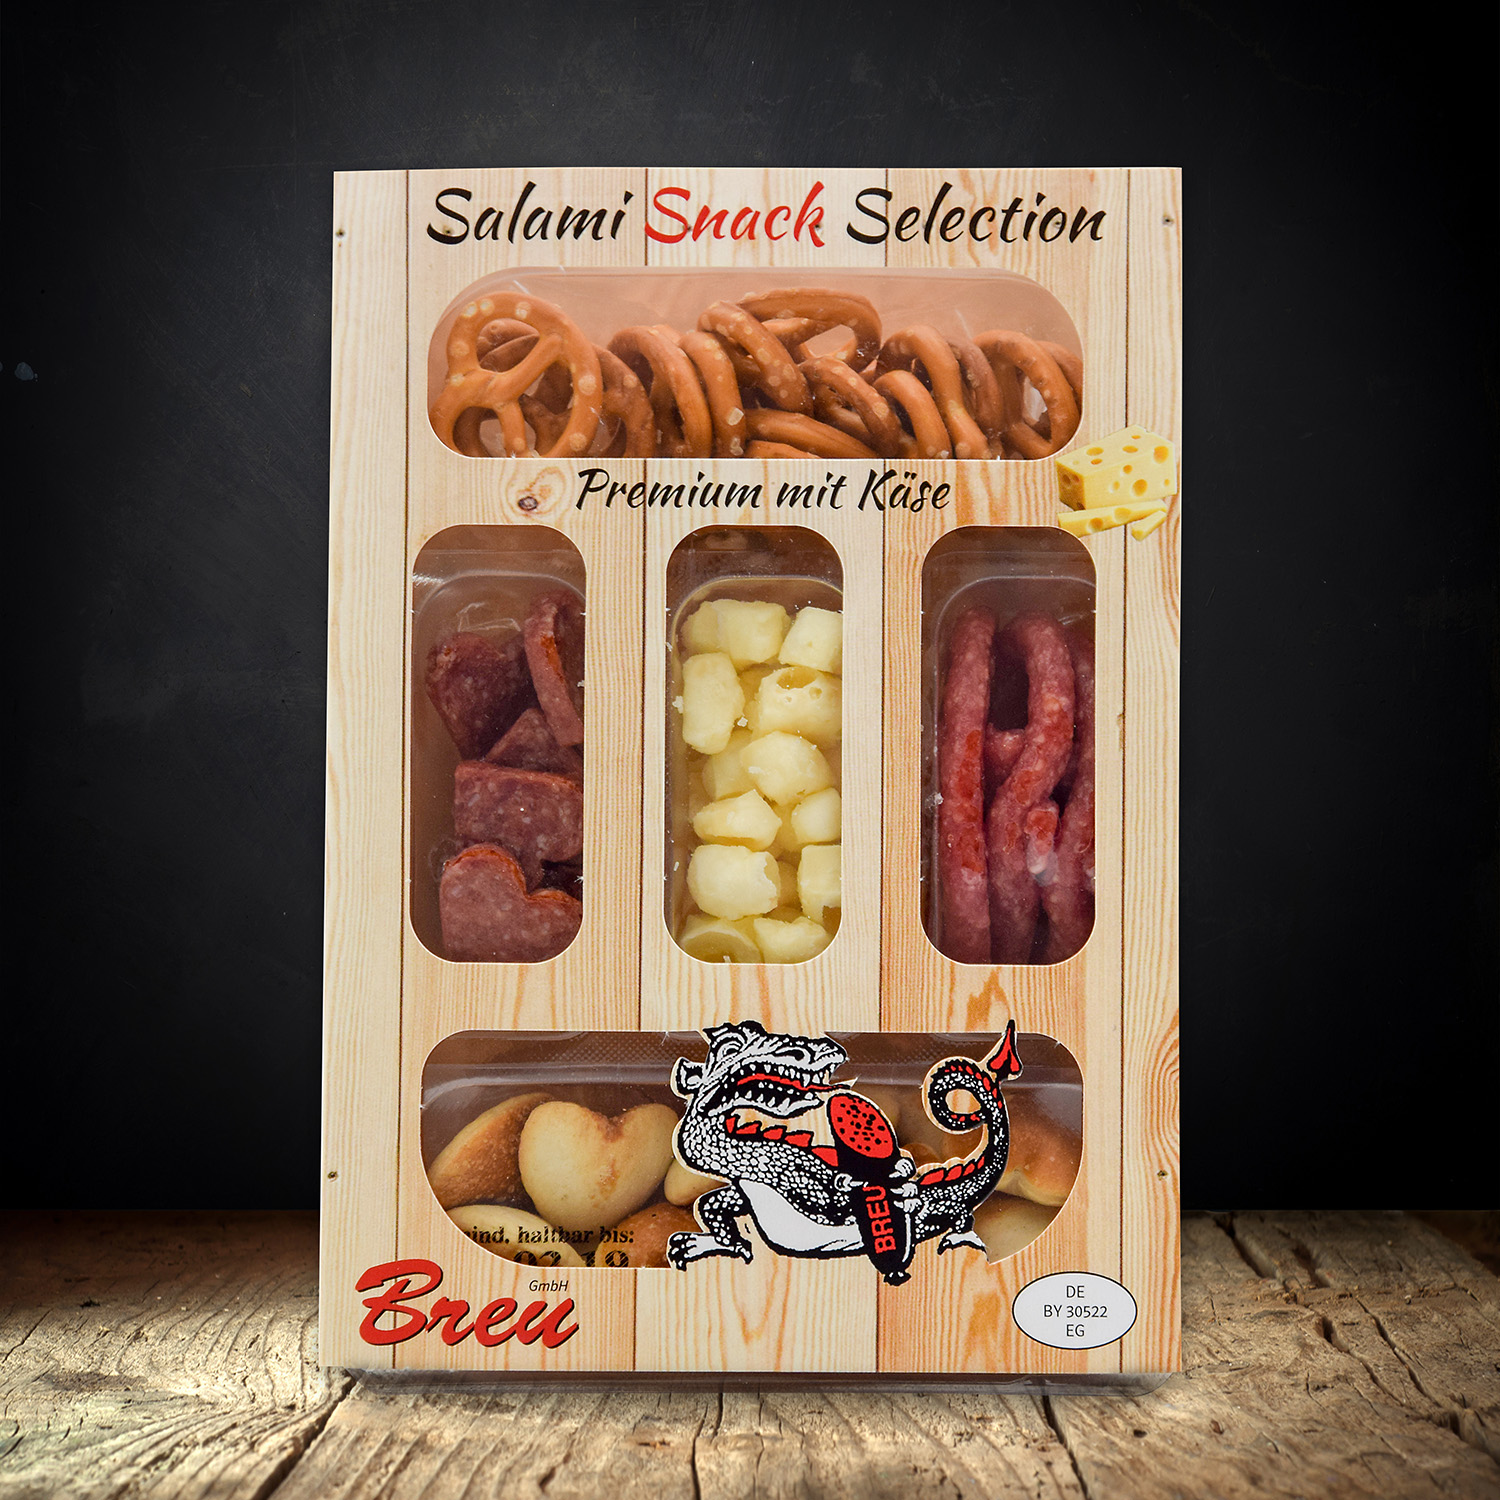 Salami Snack Selection - Premium mit Käse 80 g